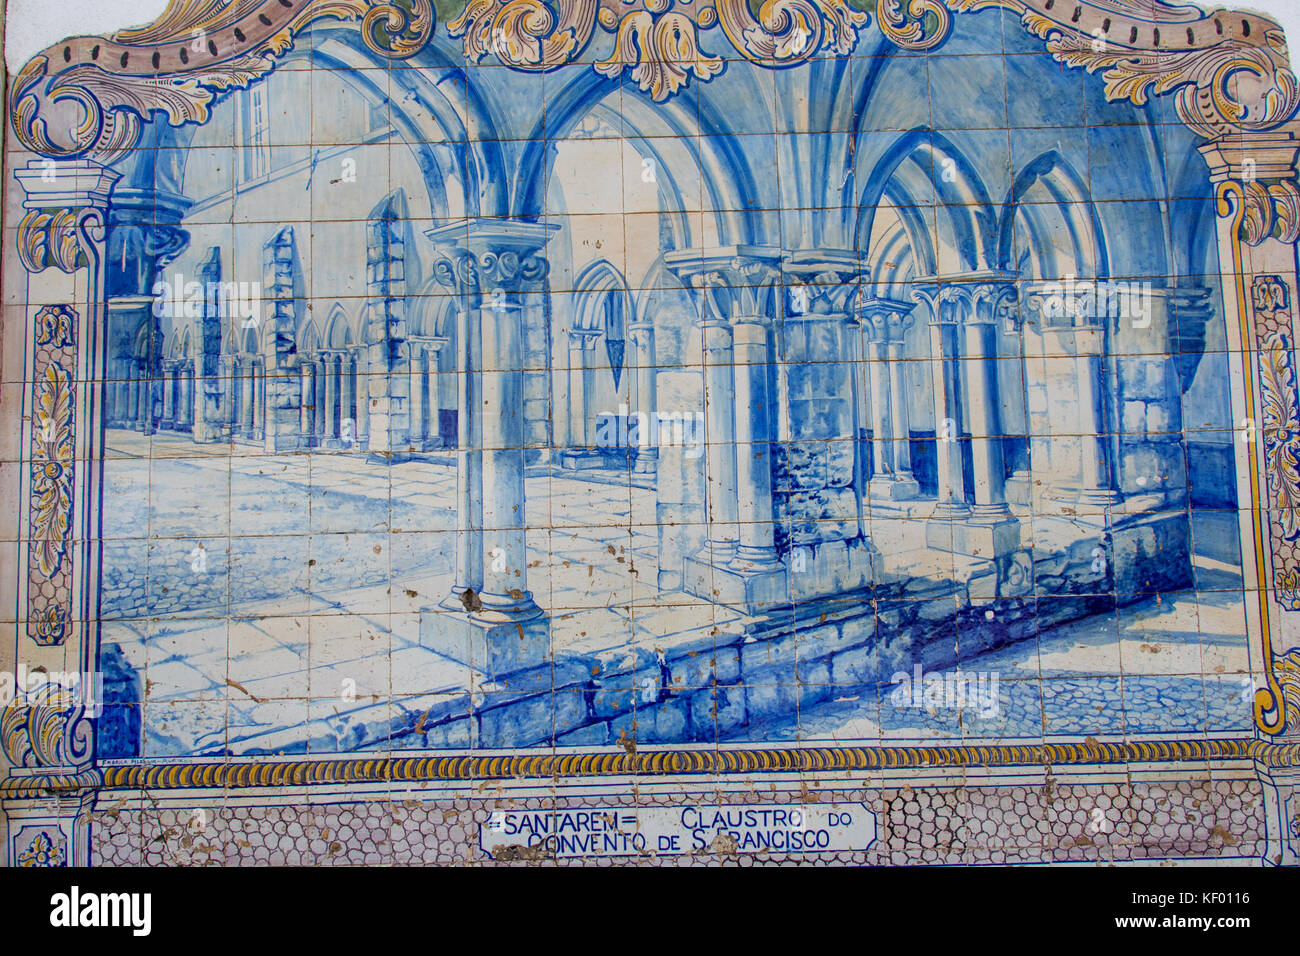 Blue ceramic tiles representing historic Claustro do Convento de Sao Francisco in Santarem, Santarem railway station, Portugal Stock Photo